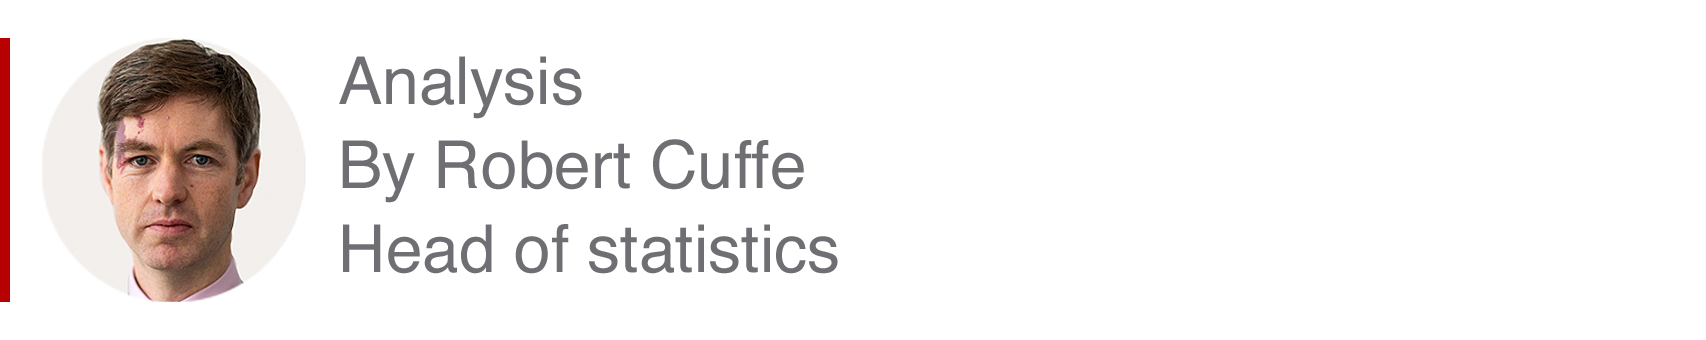 Analysis box by Robert Cuffe, Head of statistics